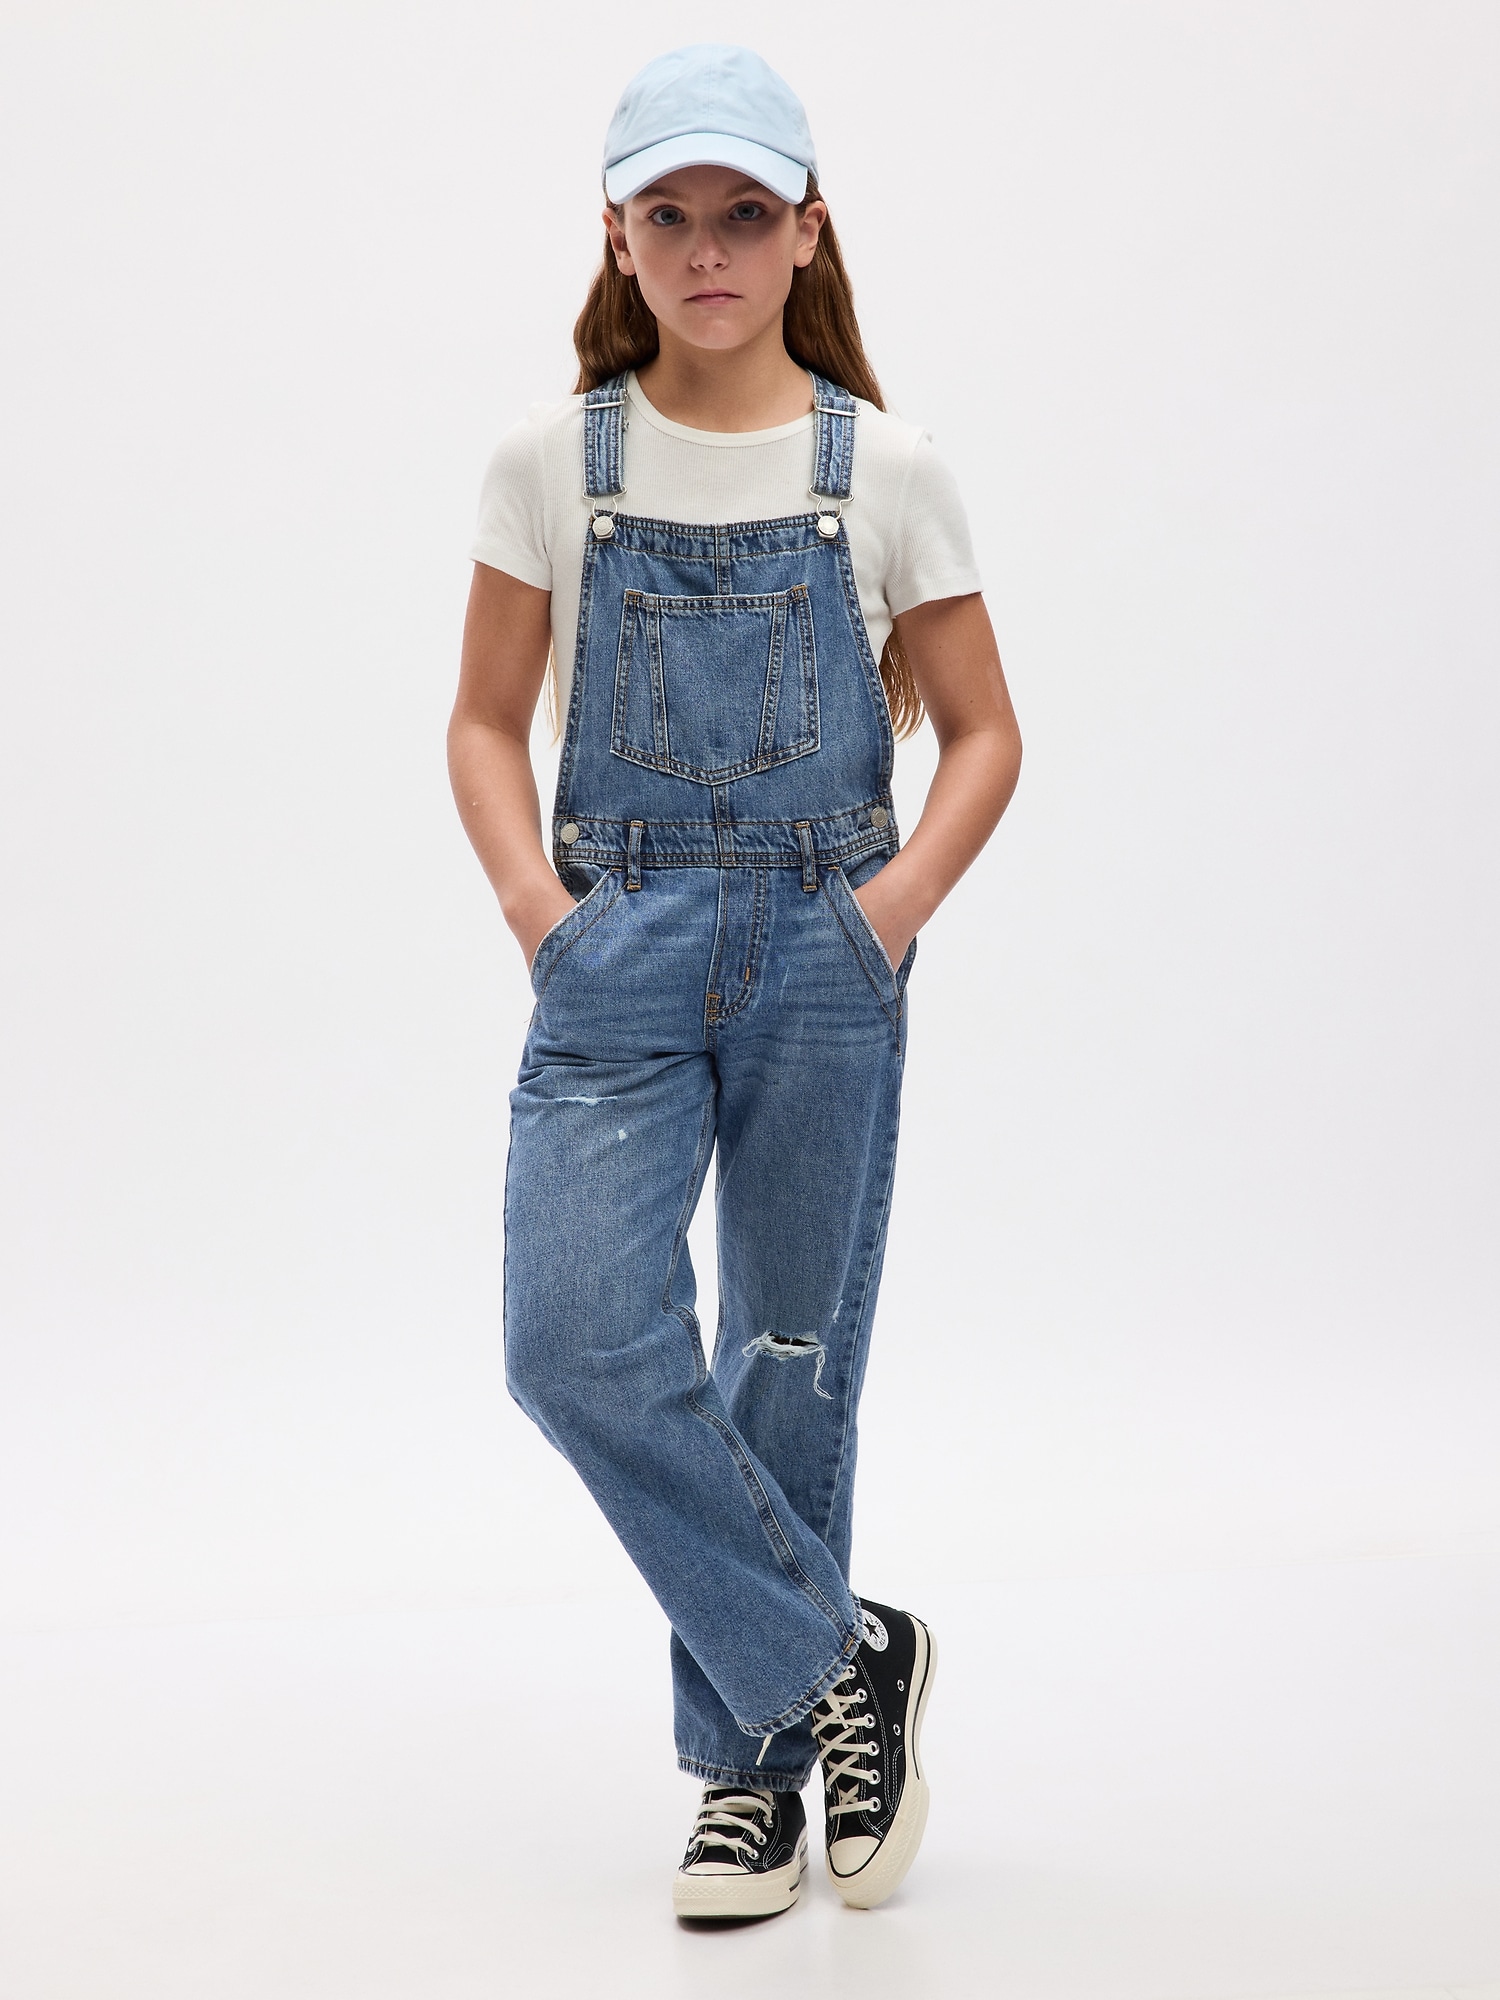 New Women Denim Suspender Jeans Jumpsuit Loose Cotton Bib Overalls Baggy  Rompers | eBay